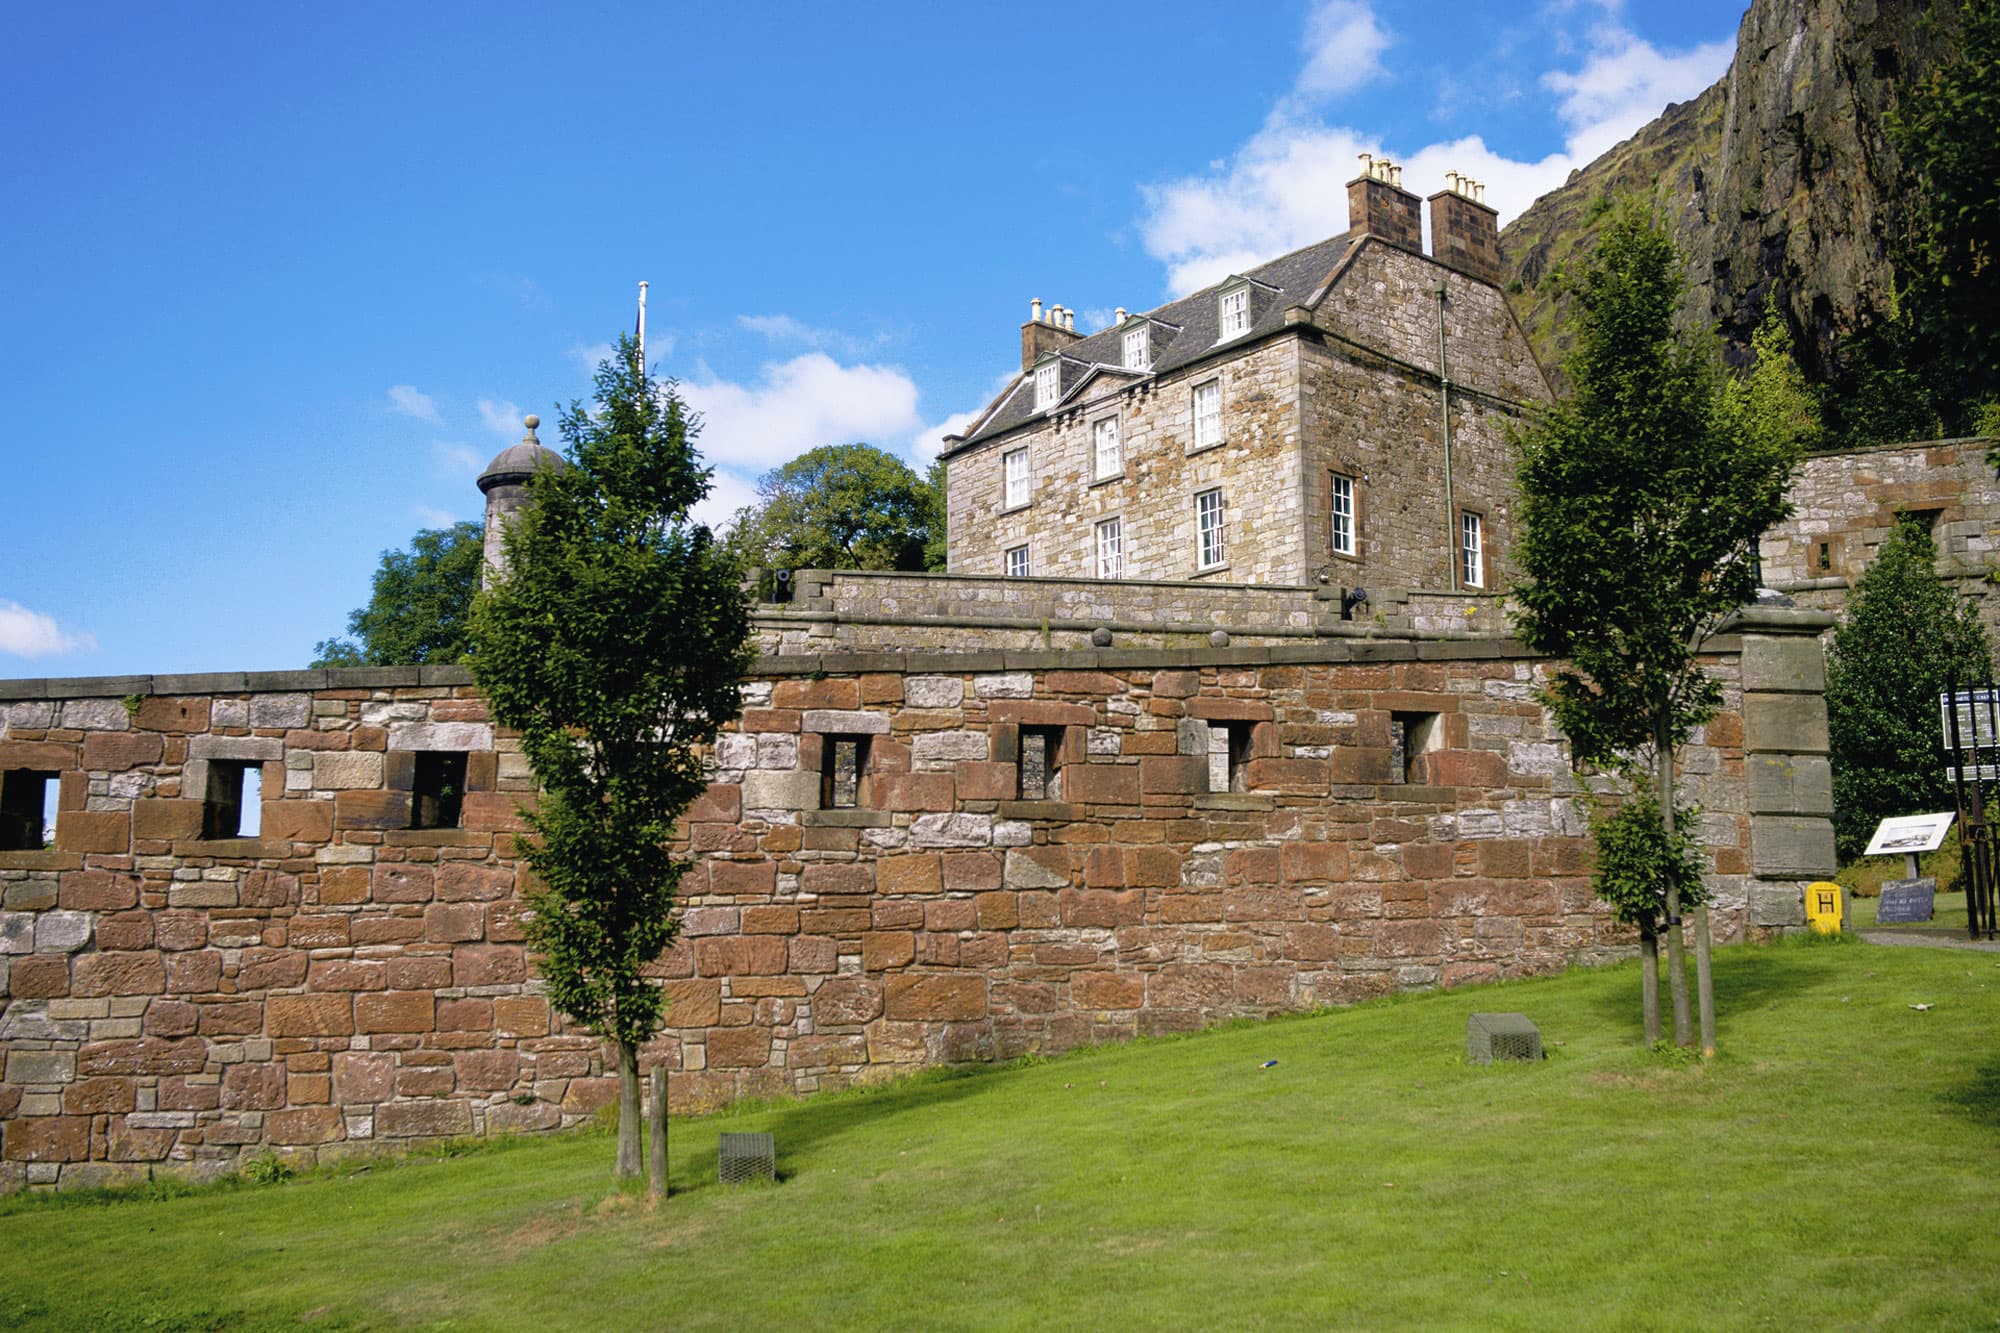 Dumbarton Castle | Paul Tomkins | VisitScotland